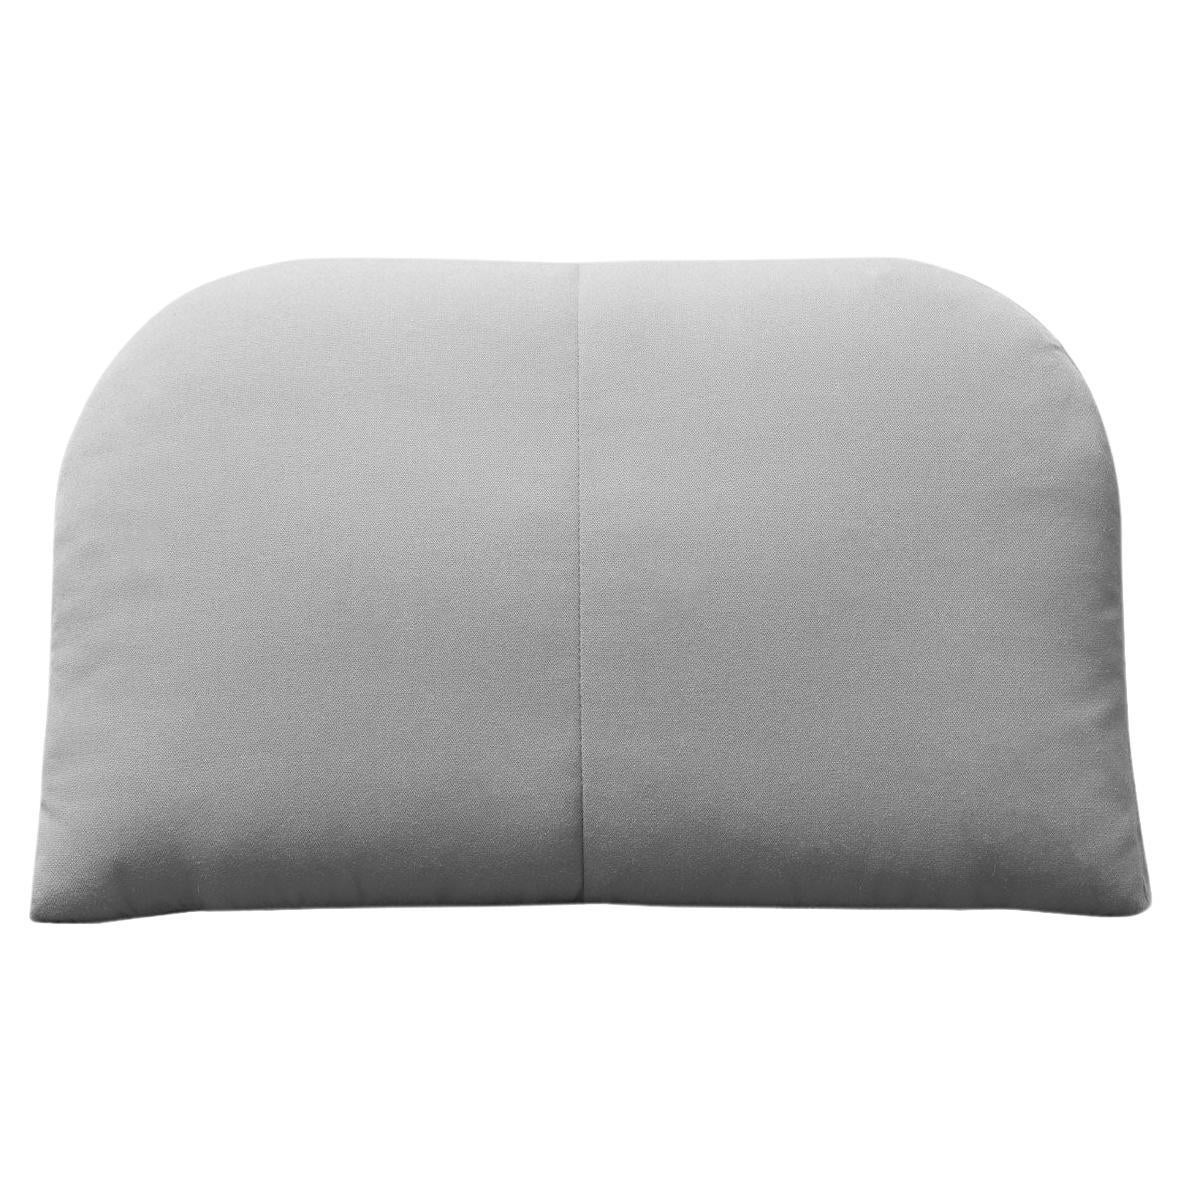 Bend Goods - Arc Throw Pillow in Granite Sunbrella